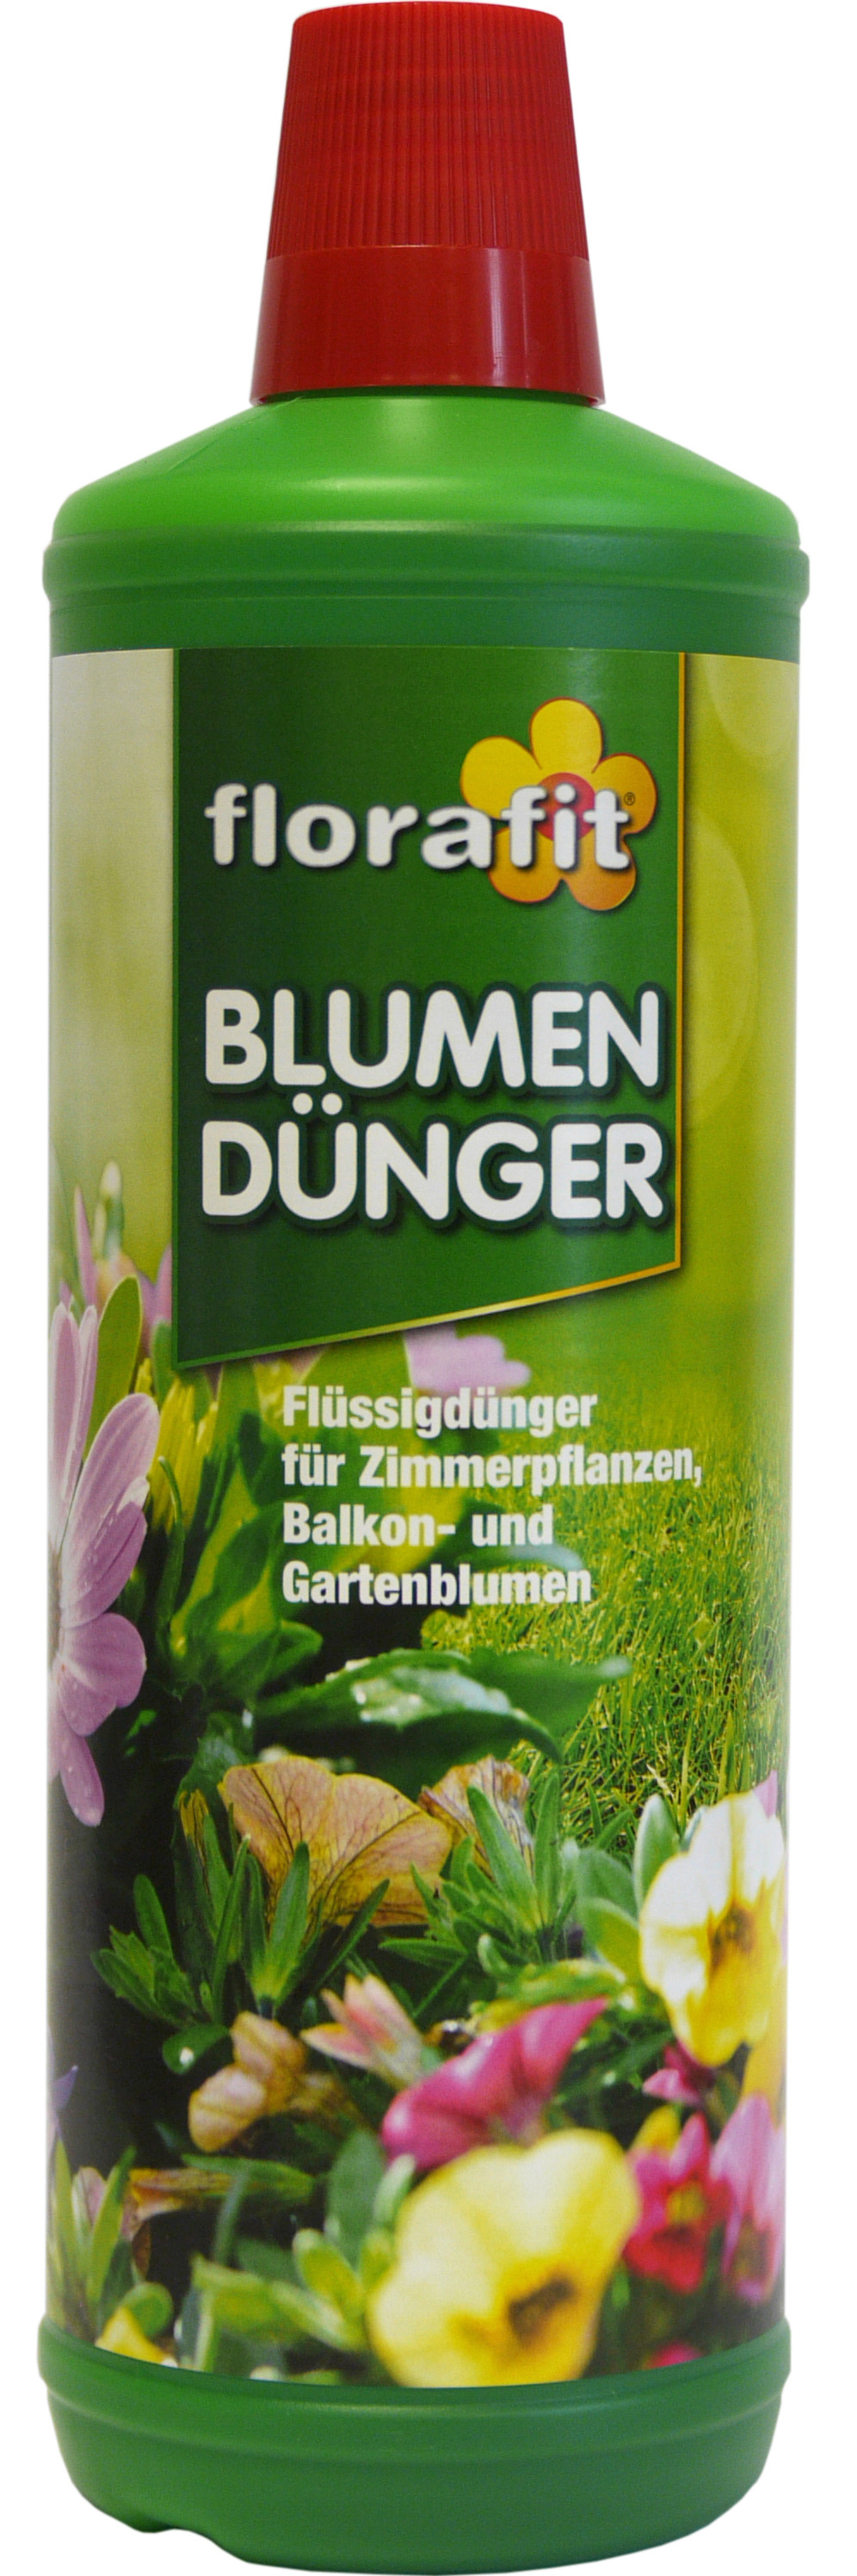 02200 - florafit Blumendünger 1000 ml